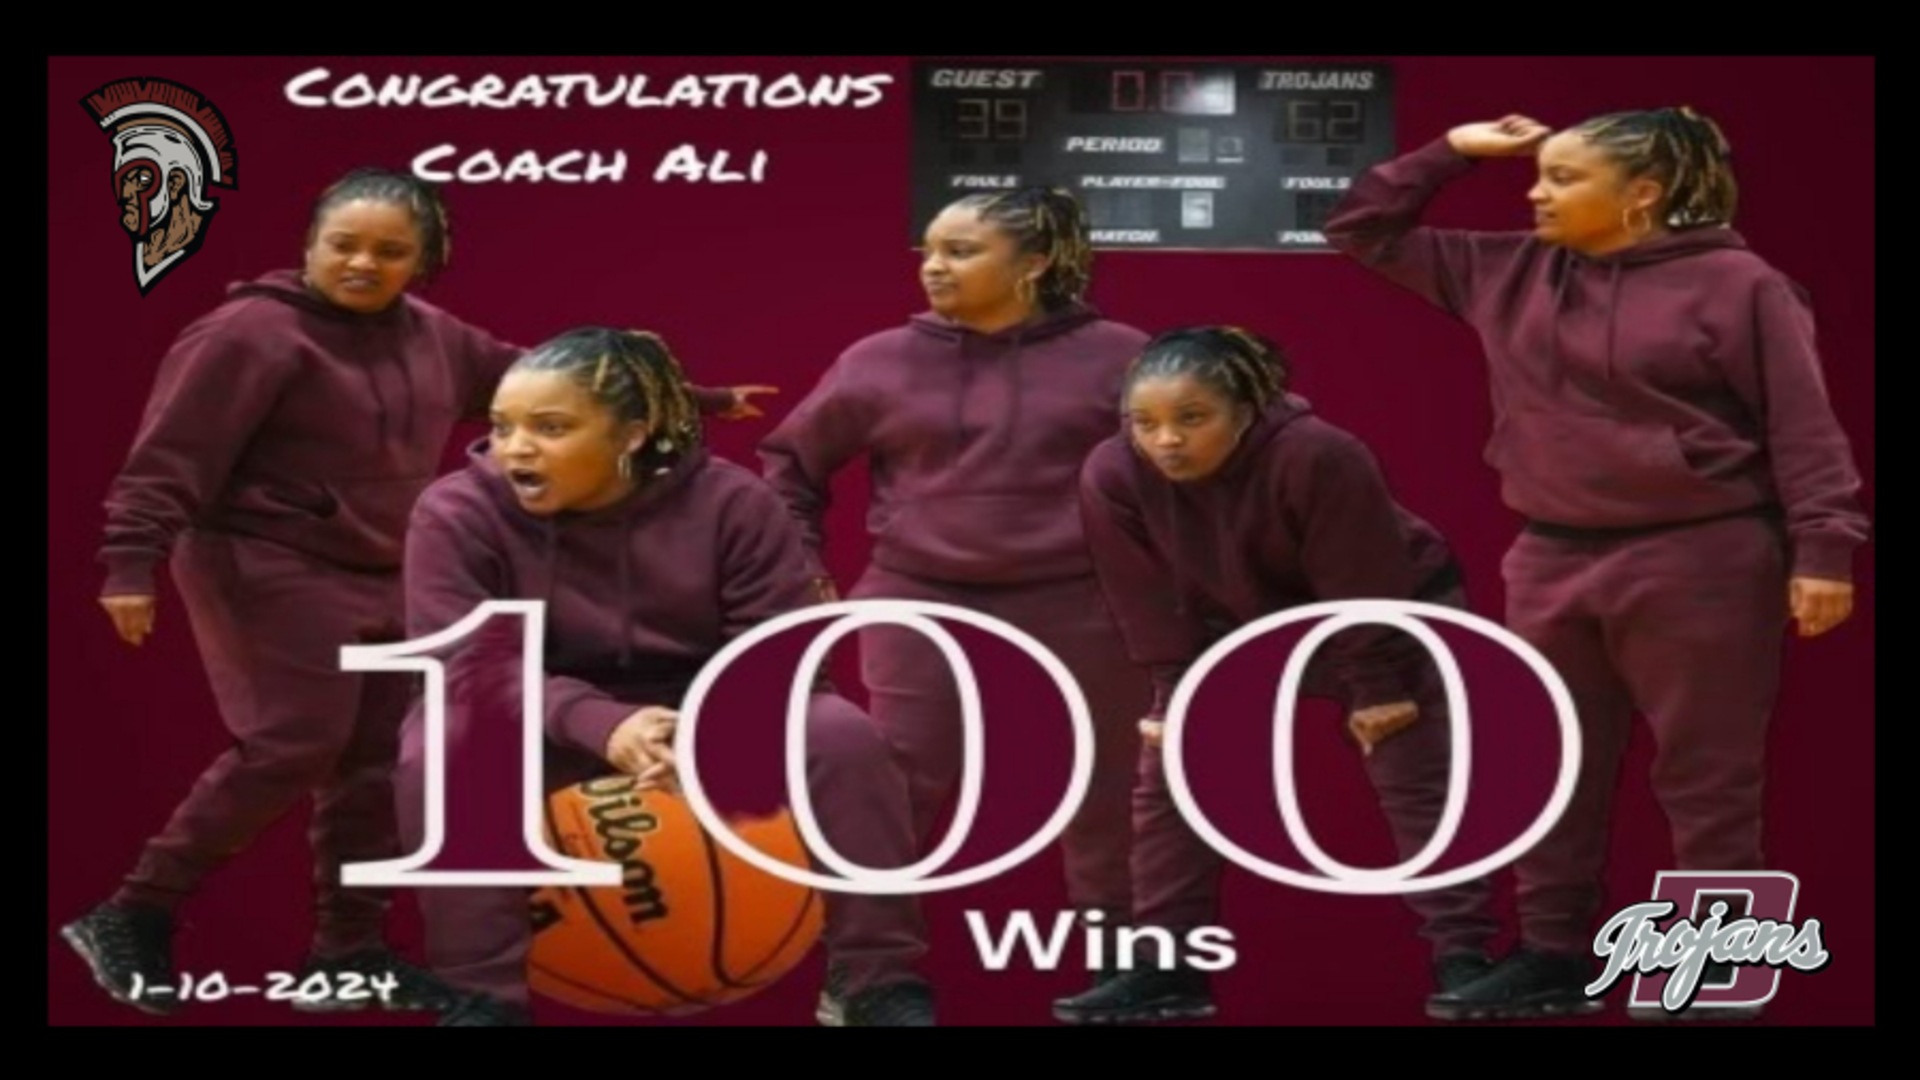 Slide 1 - Congratulations Coach Ali